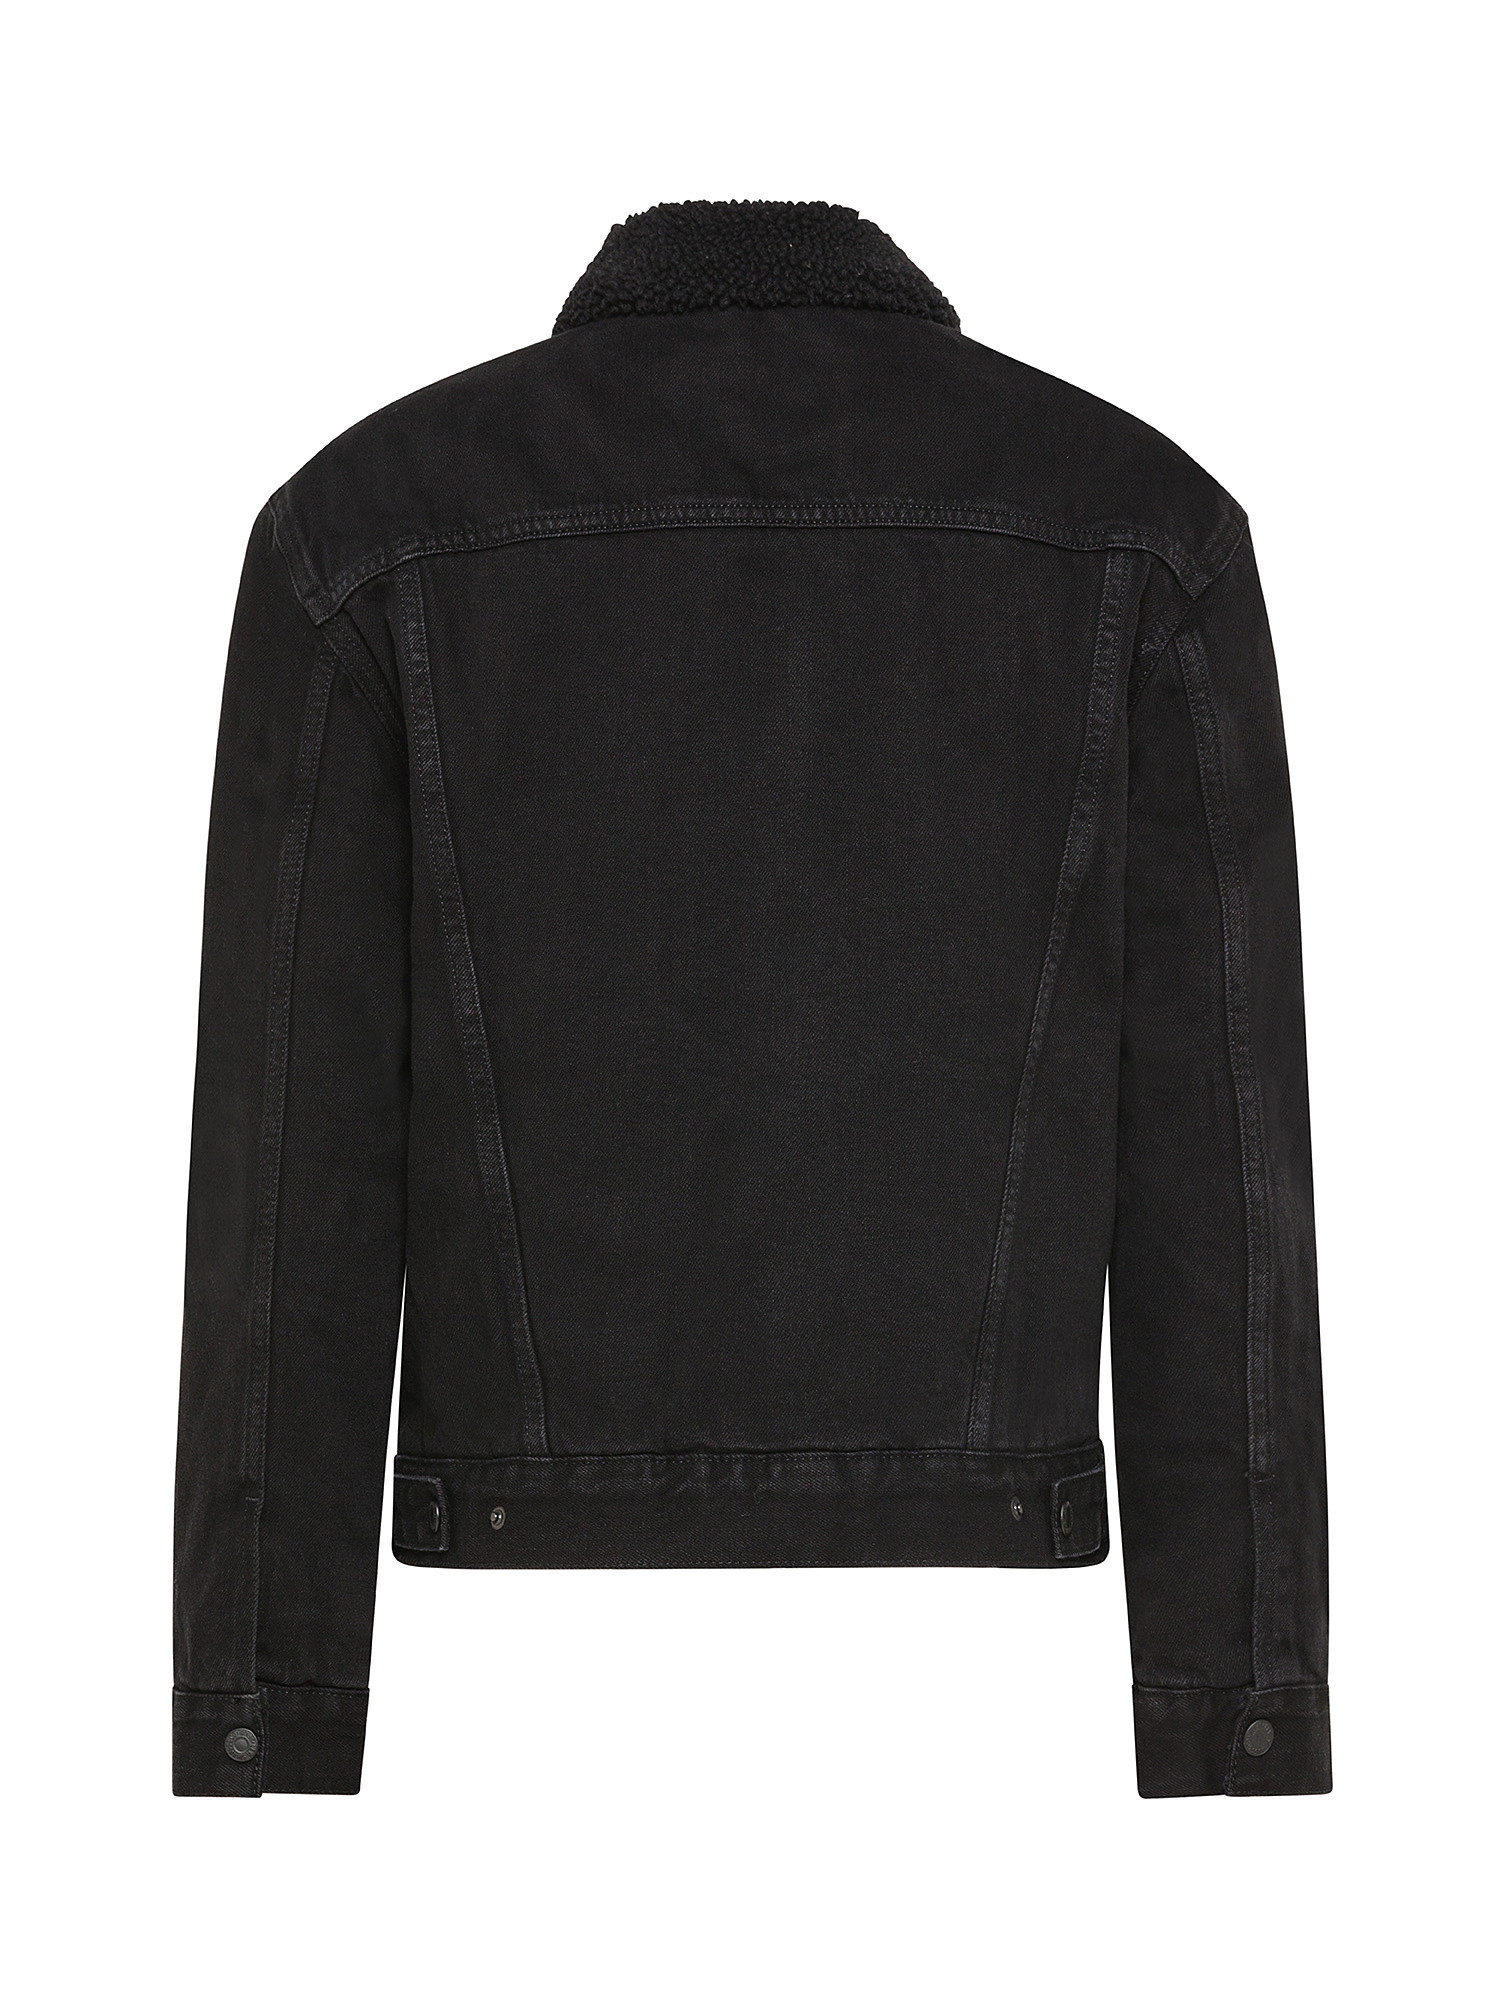 Denim jacket with faux fur collar, Black, large image number 1